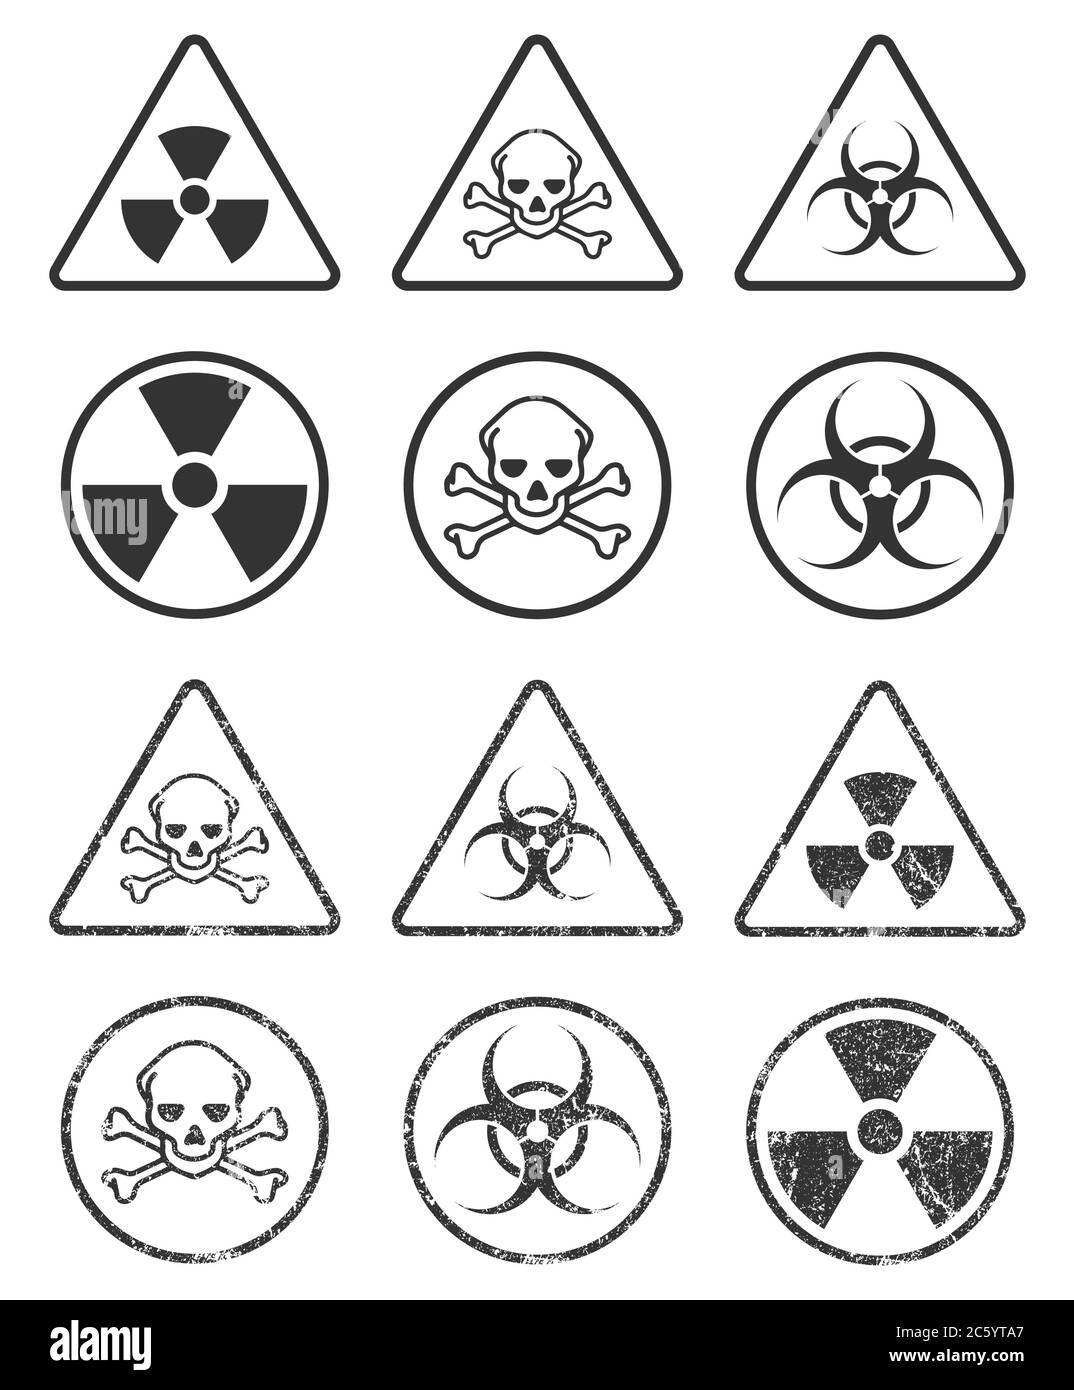 image line toxic biohazard